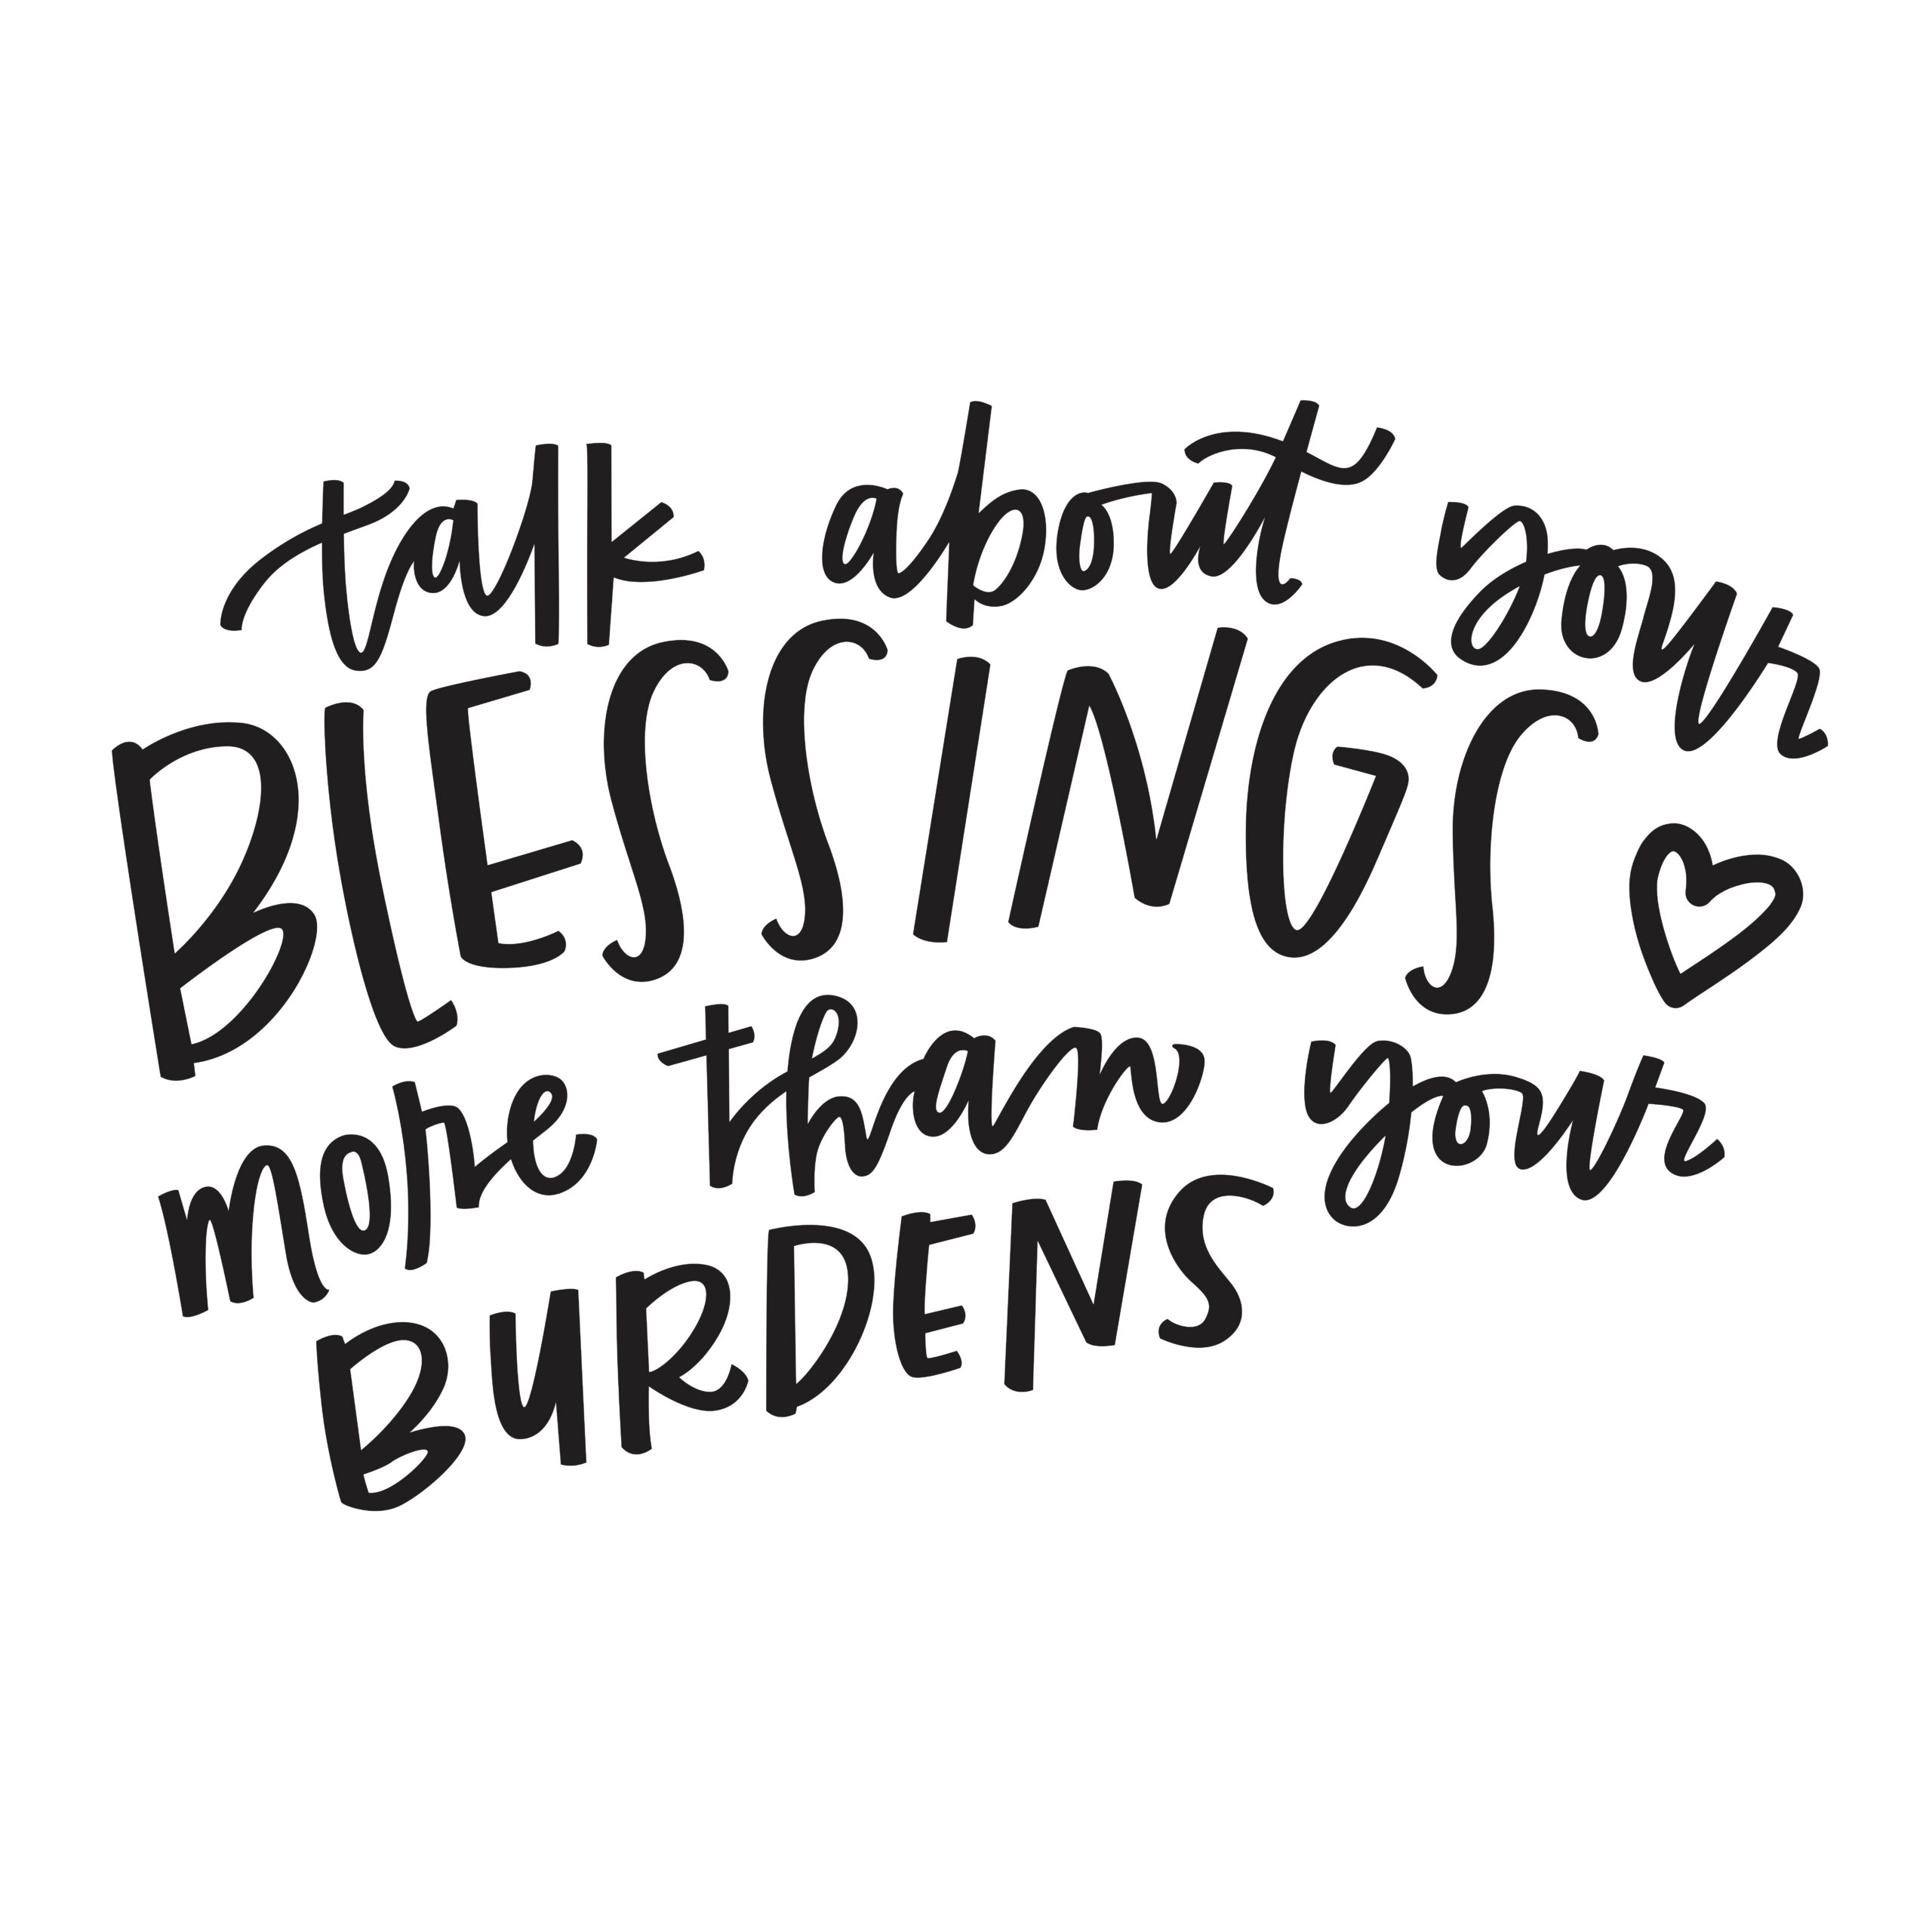 Blessings more than burdens